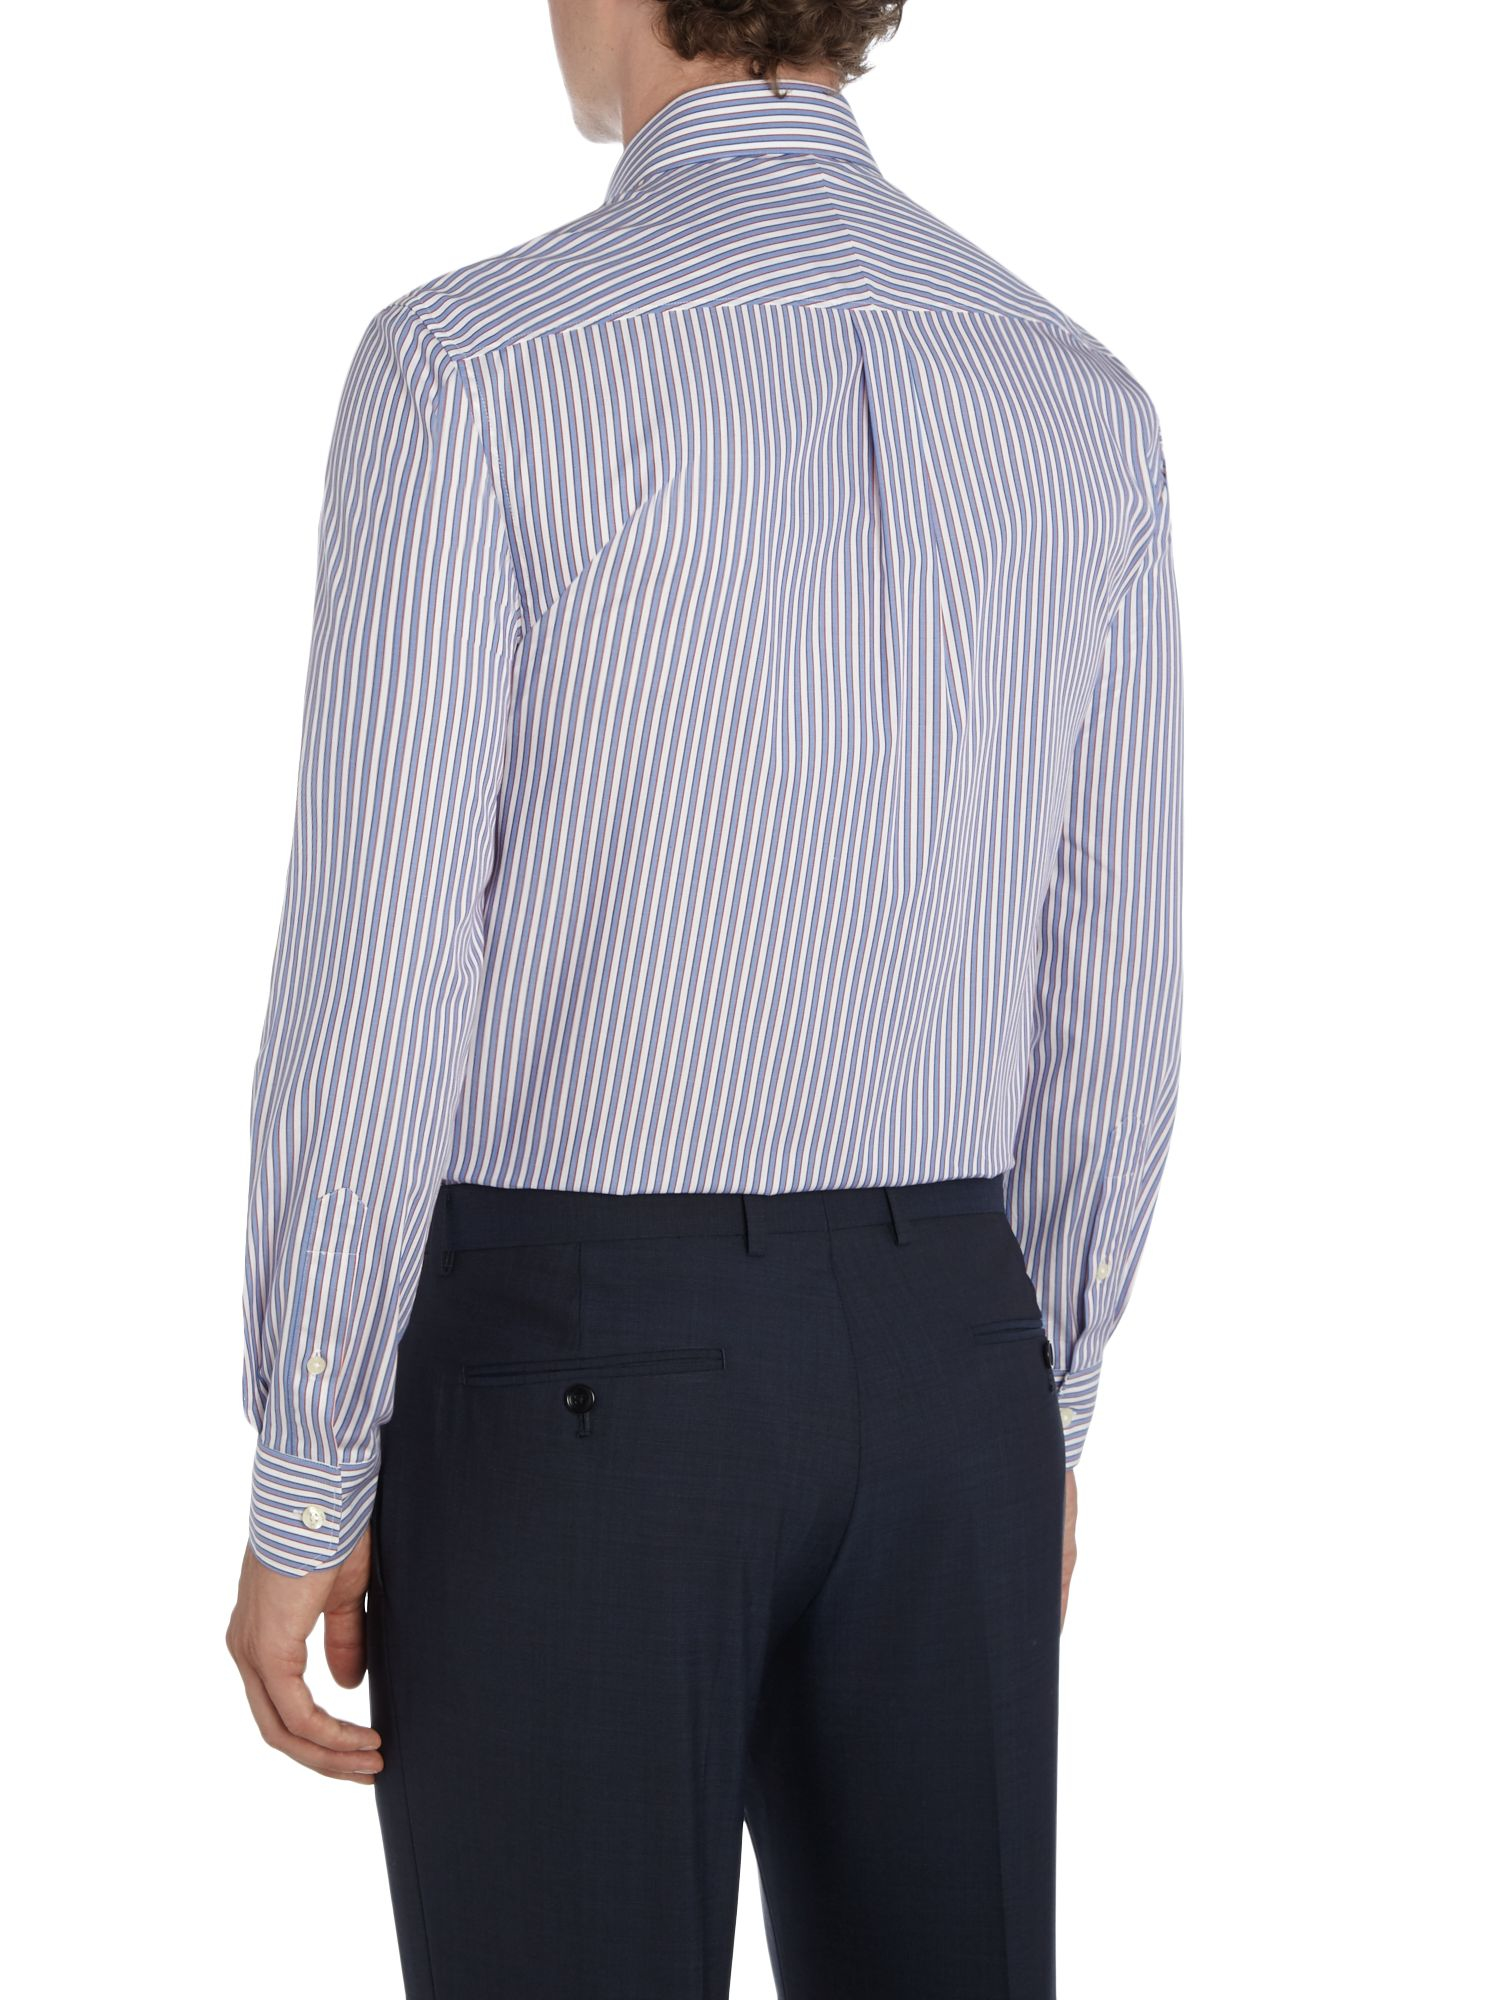 Lyst - Howick Allendale Stripe Shirt in Blue for Men